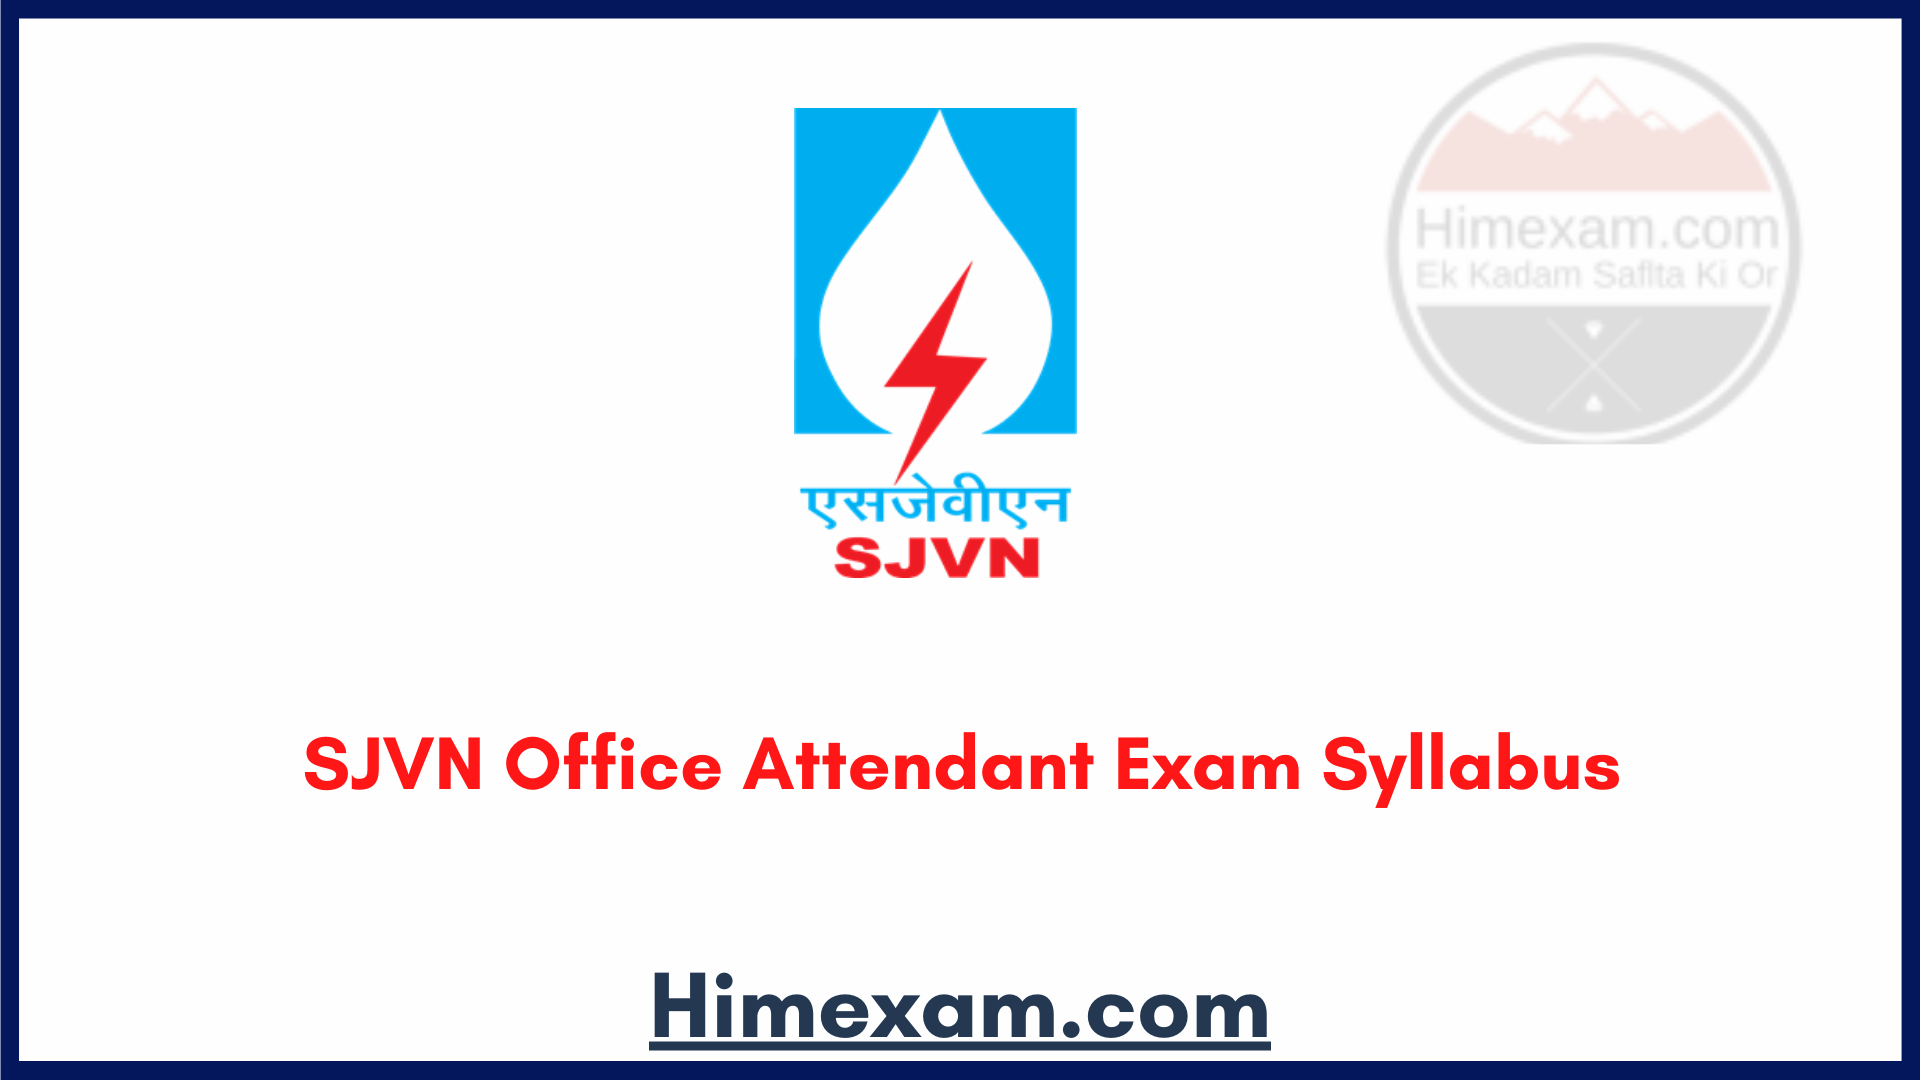 SJVN Office Attendant Exam Syllabus